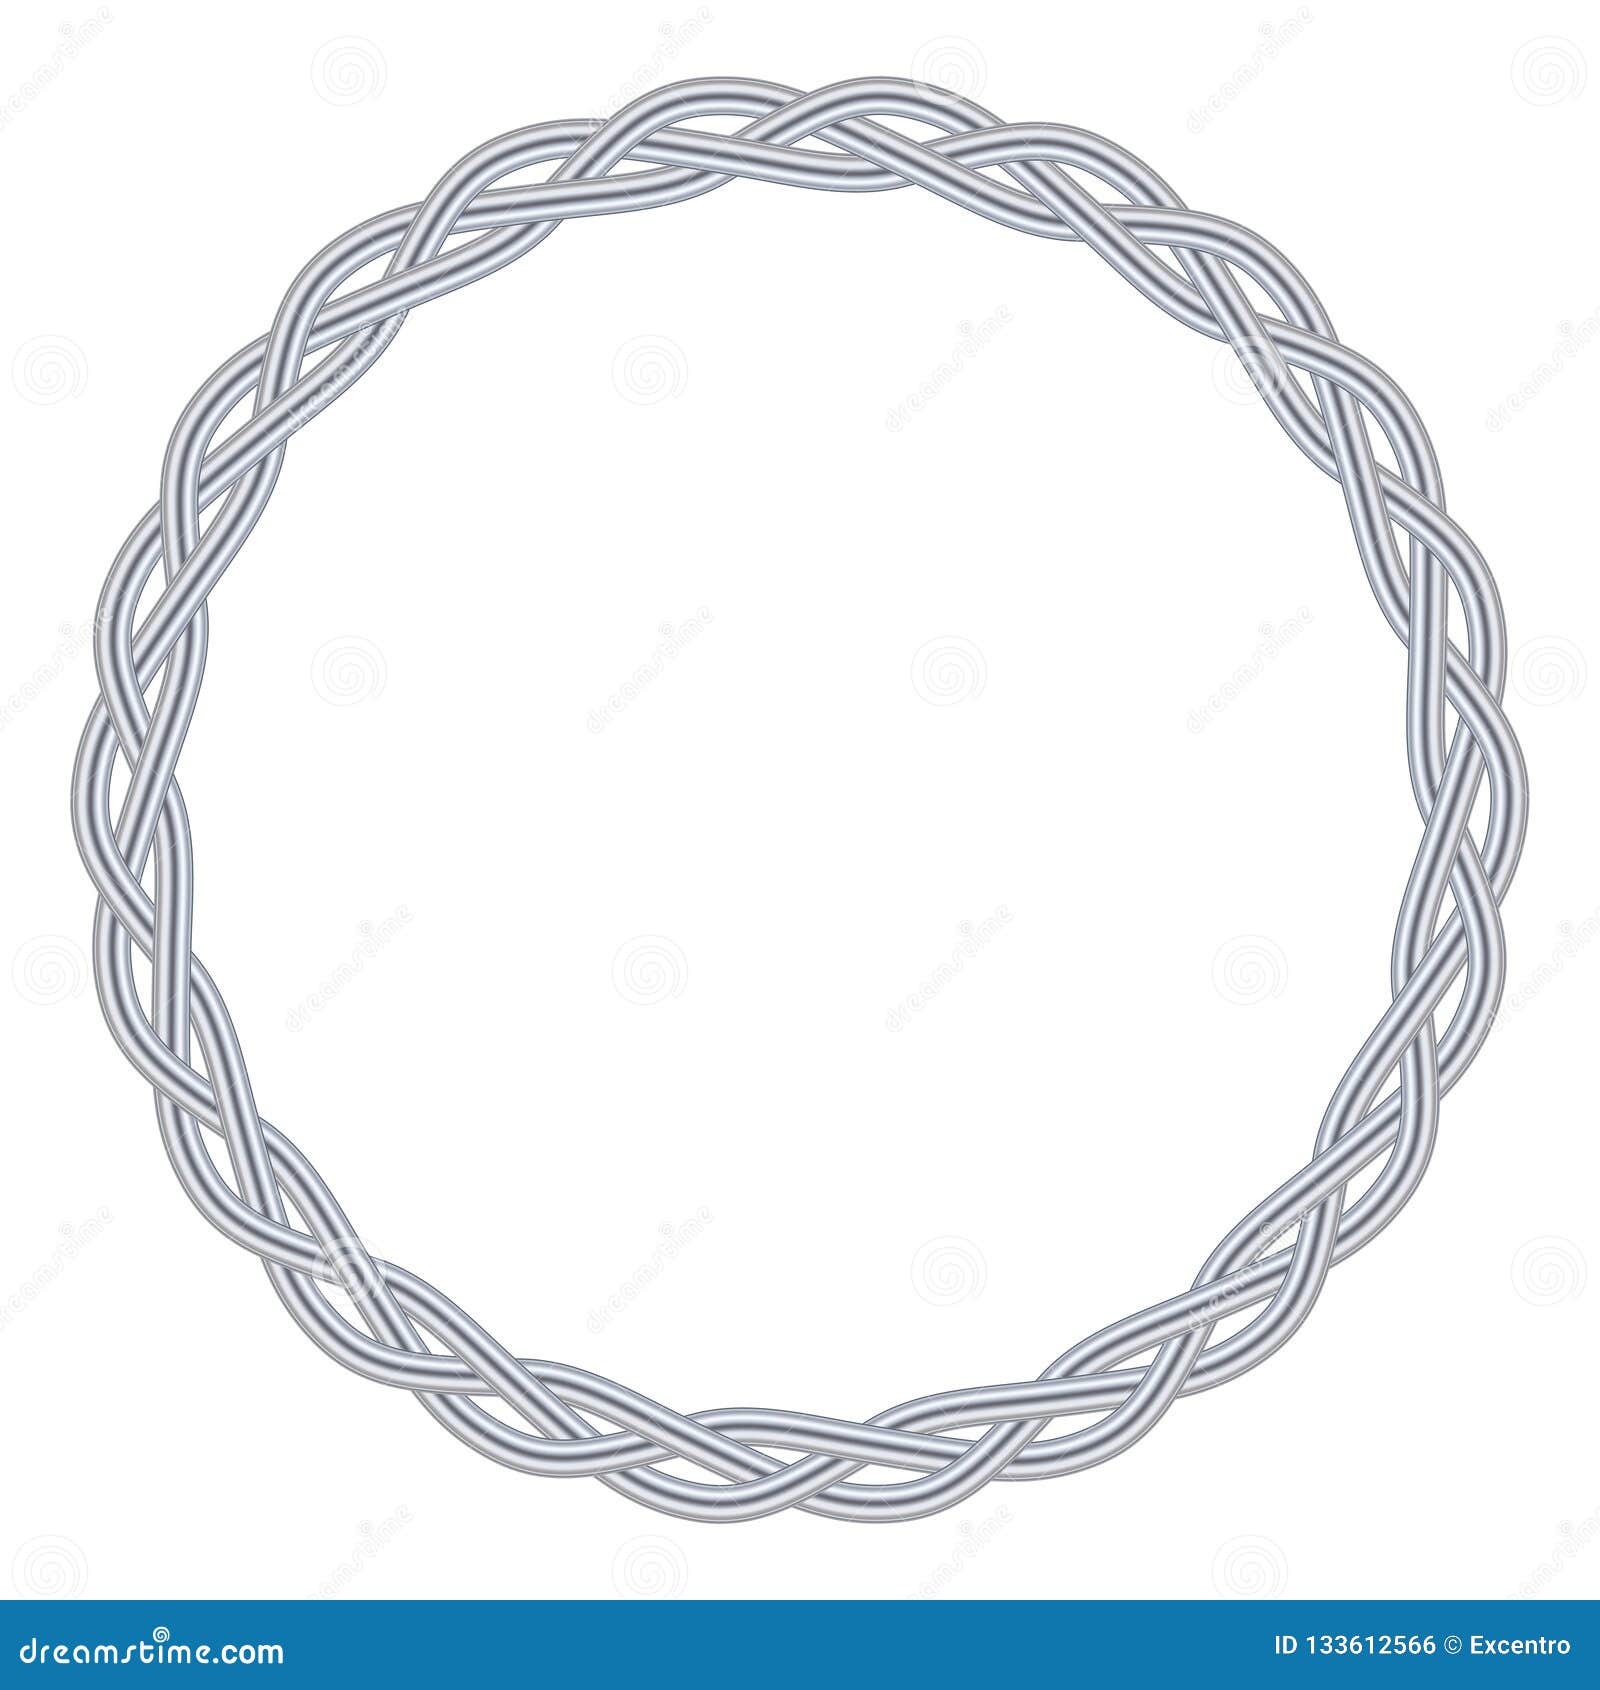 metall braided circle